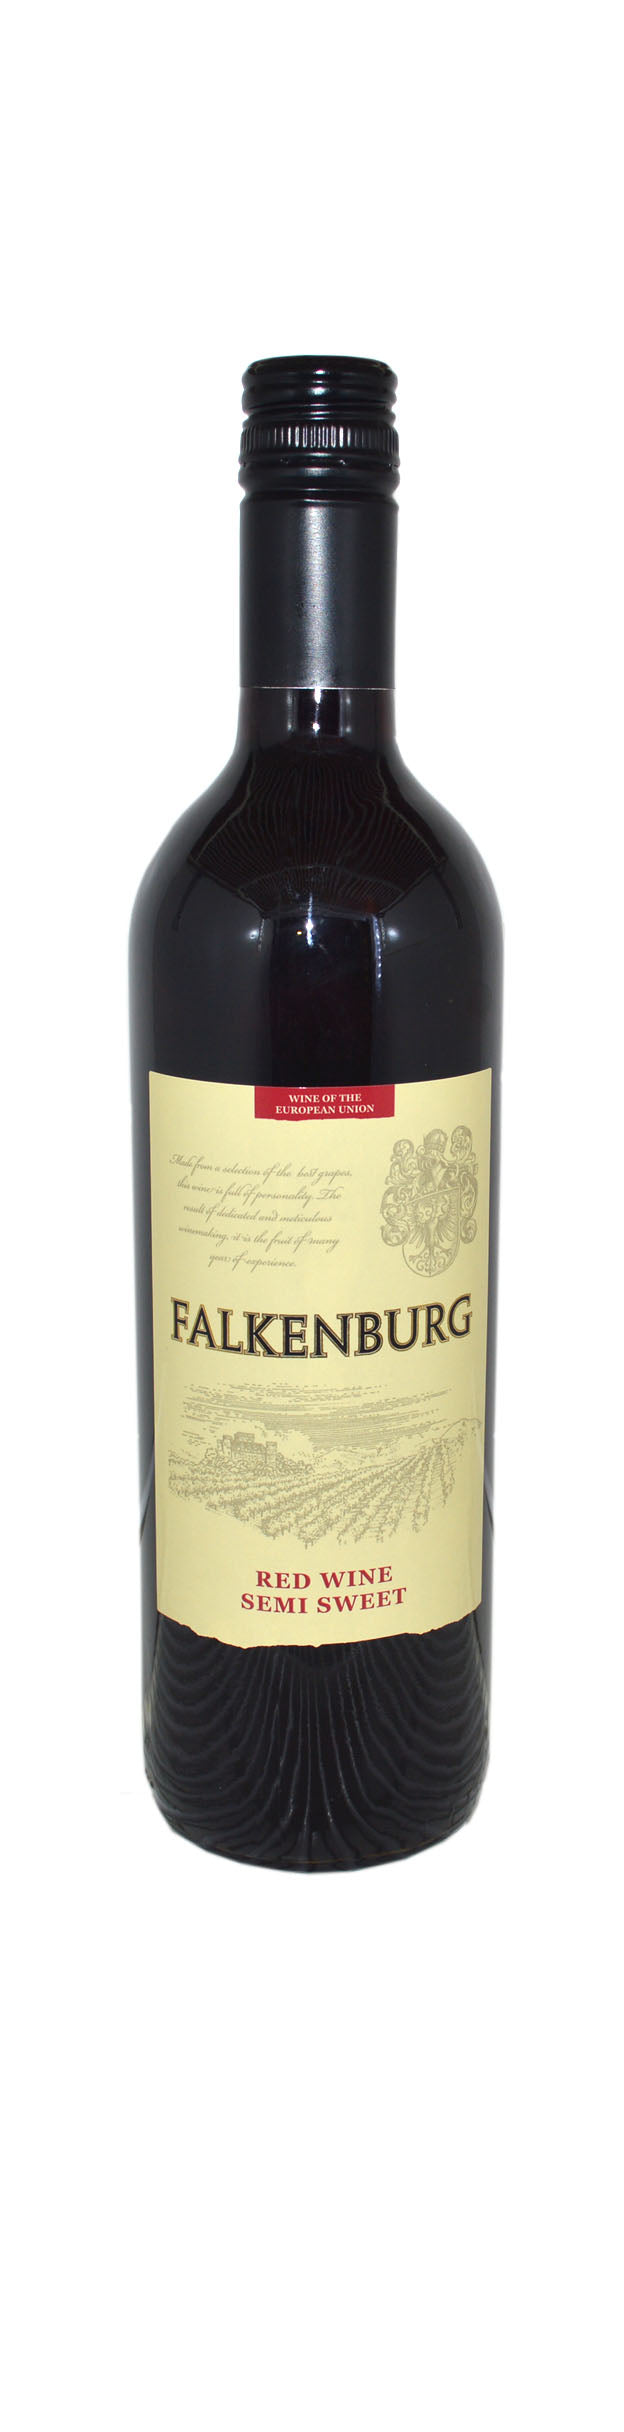 Falkenburg Red Semi Sweet Wine